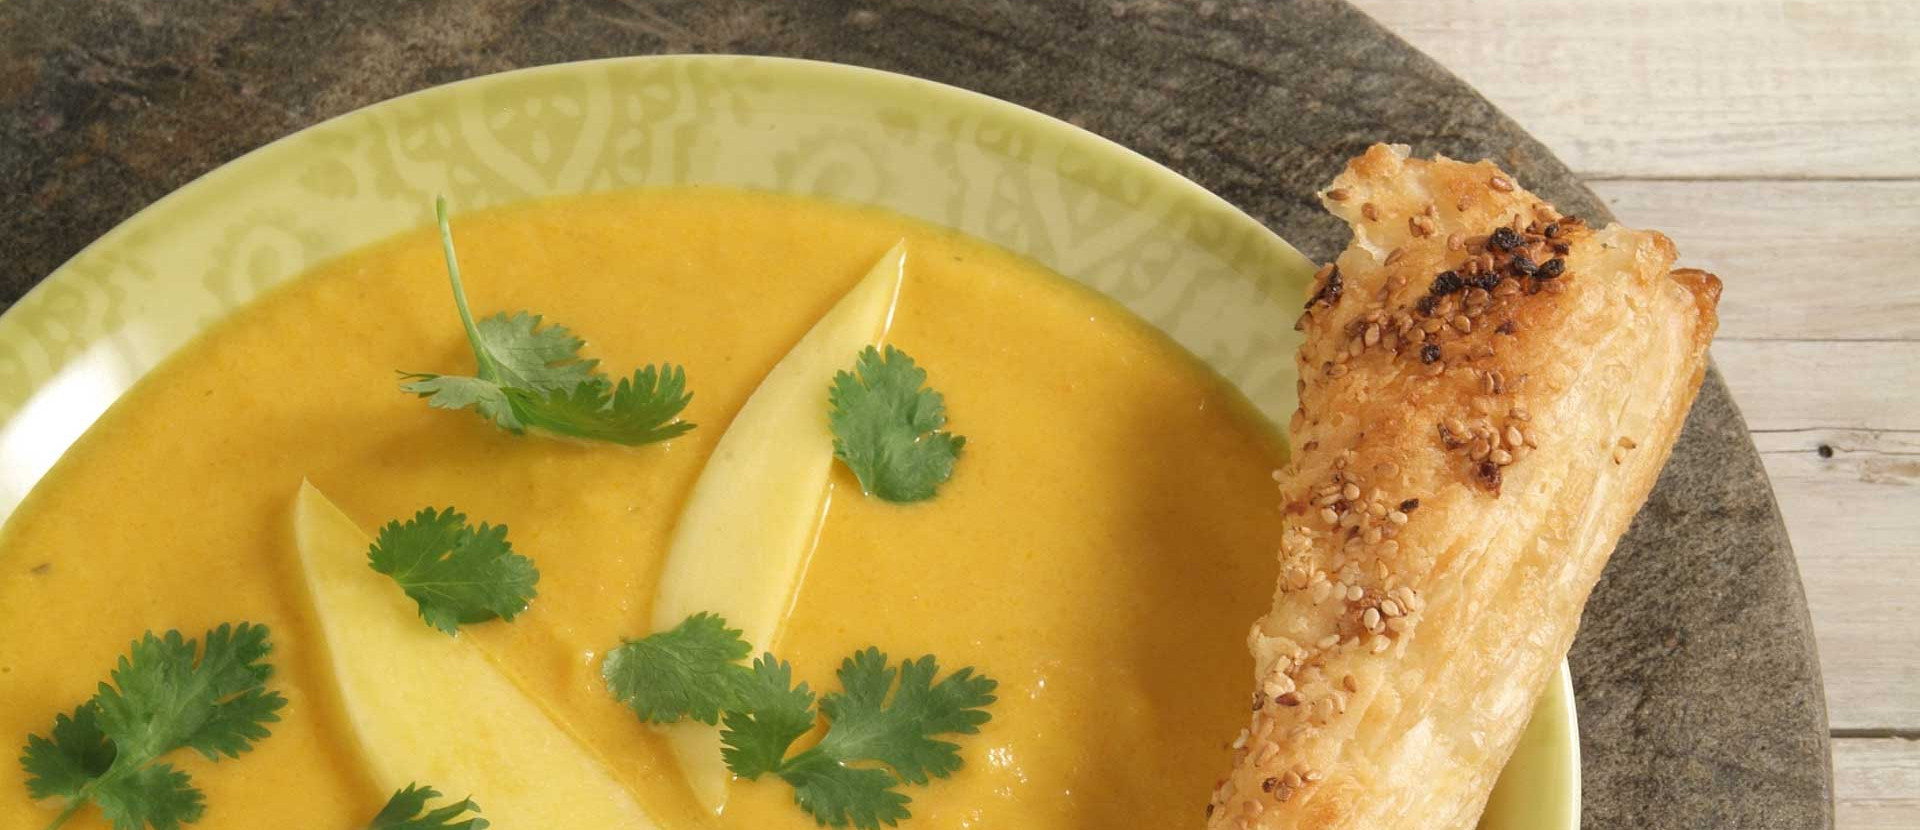 Mango-Möhren-Suppe mit Sesam-Knusperecken Rezept | tegut...